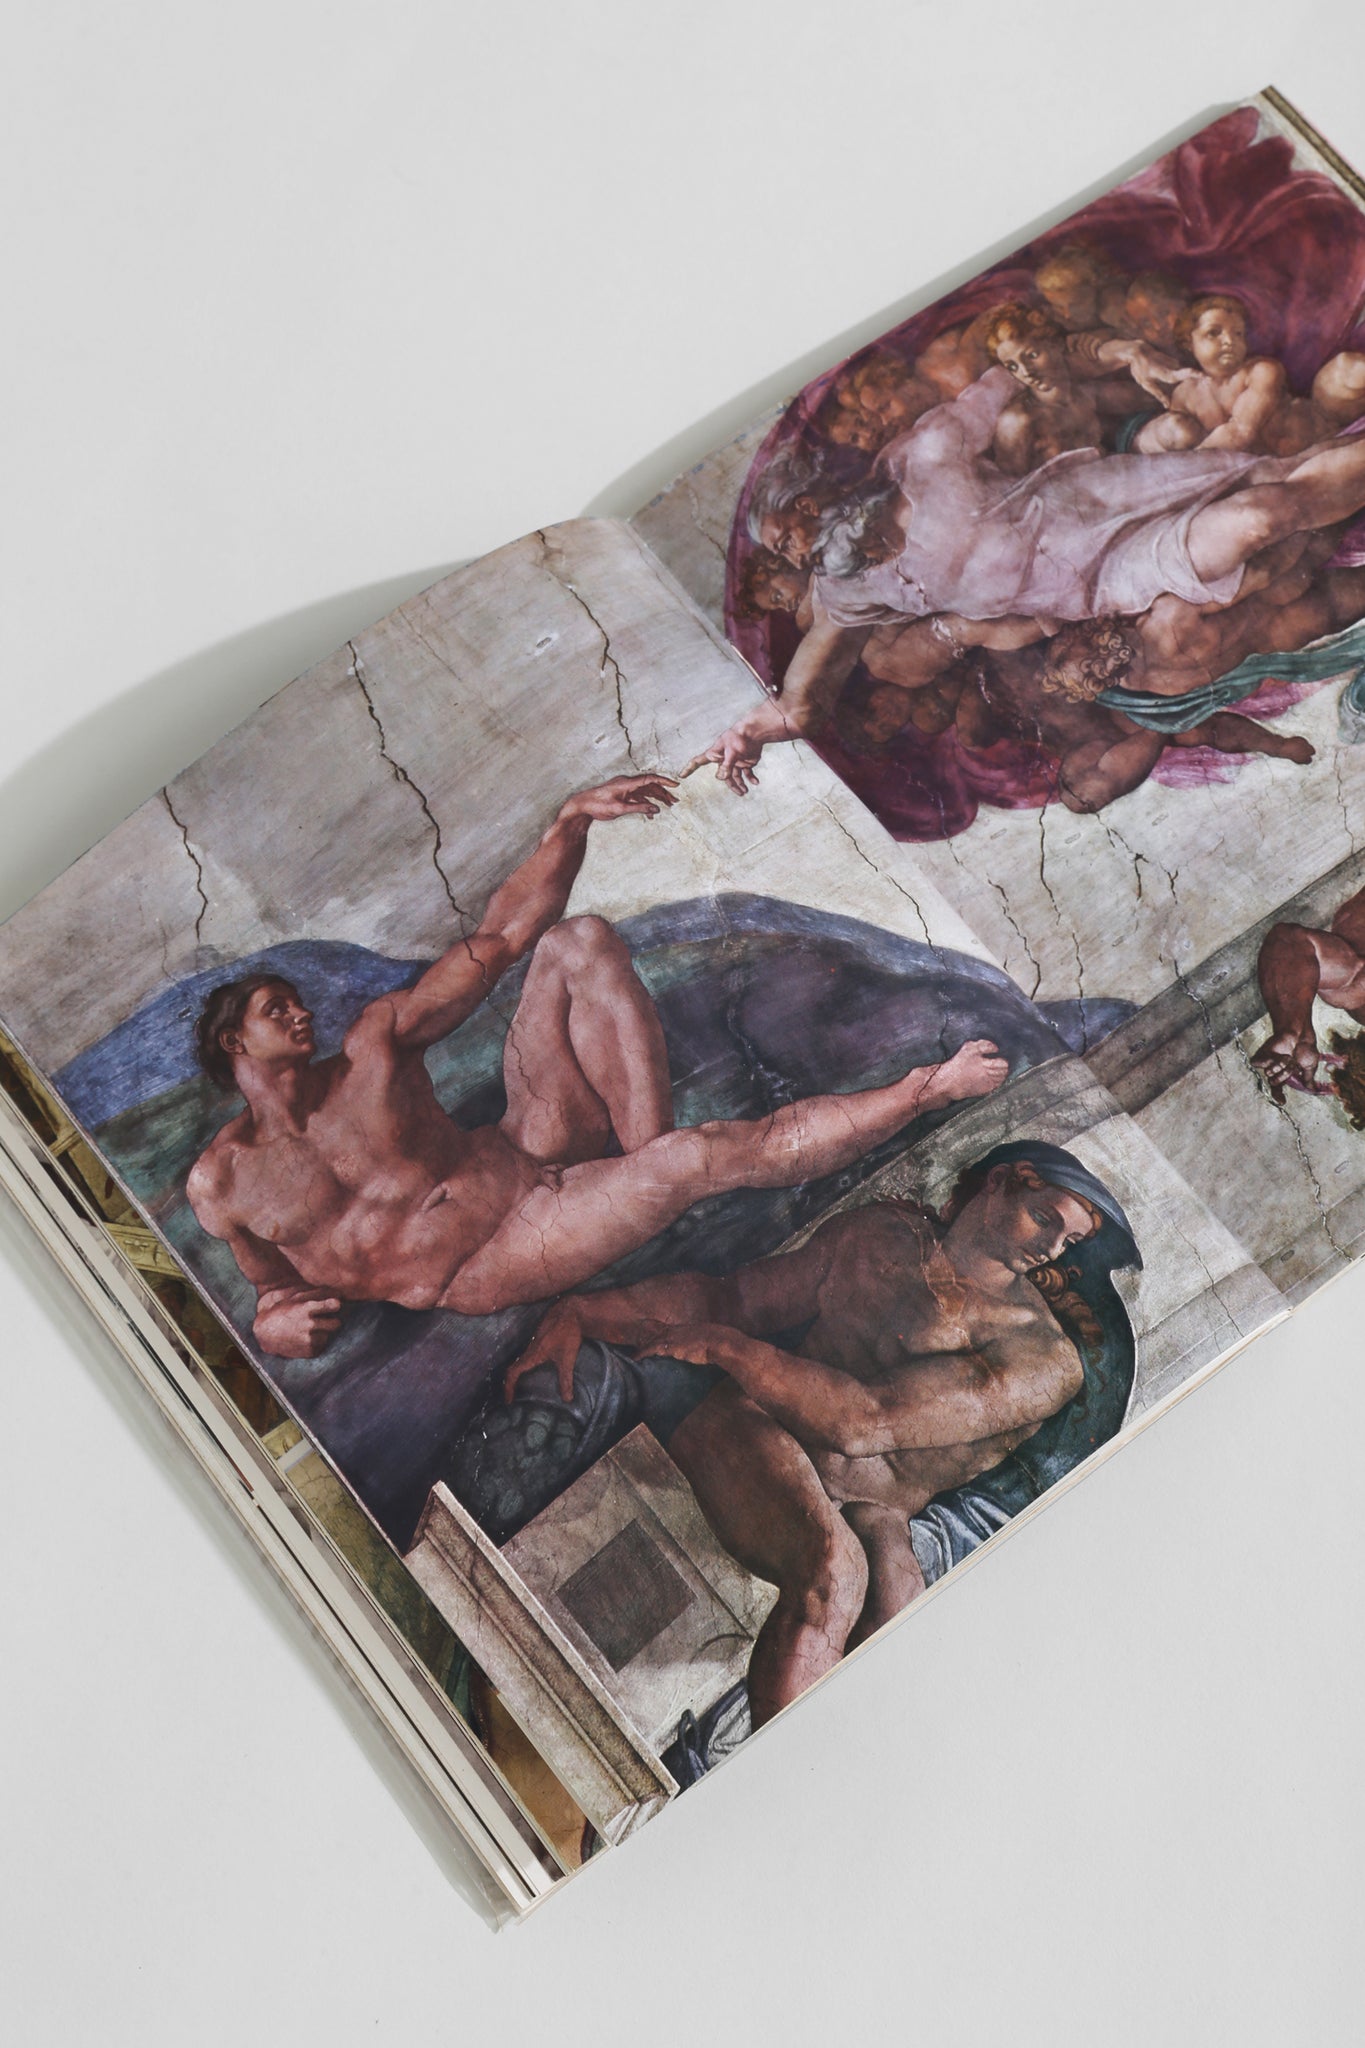 Michelangelo Buonarroti Book